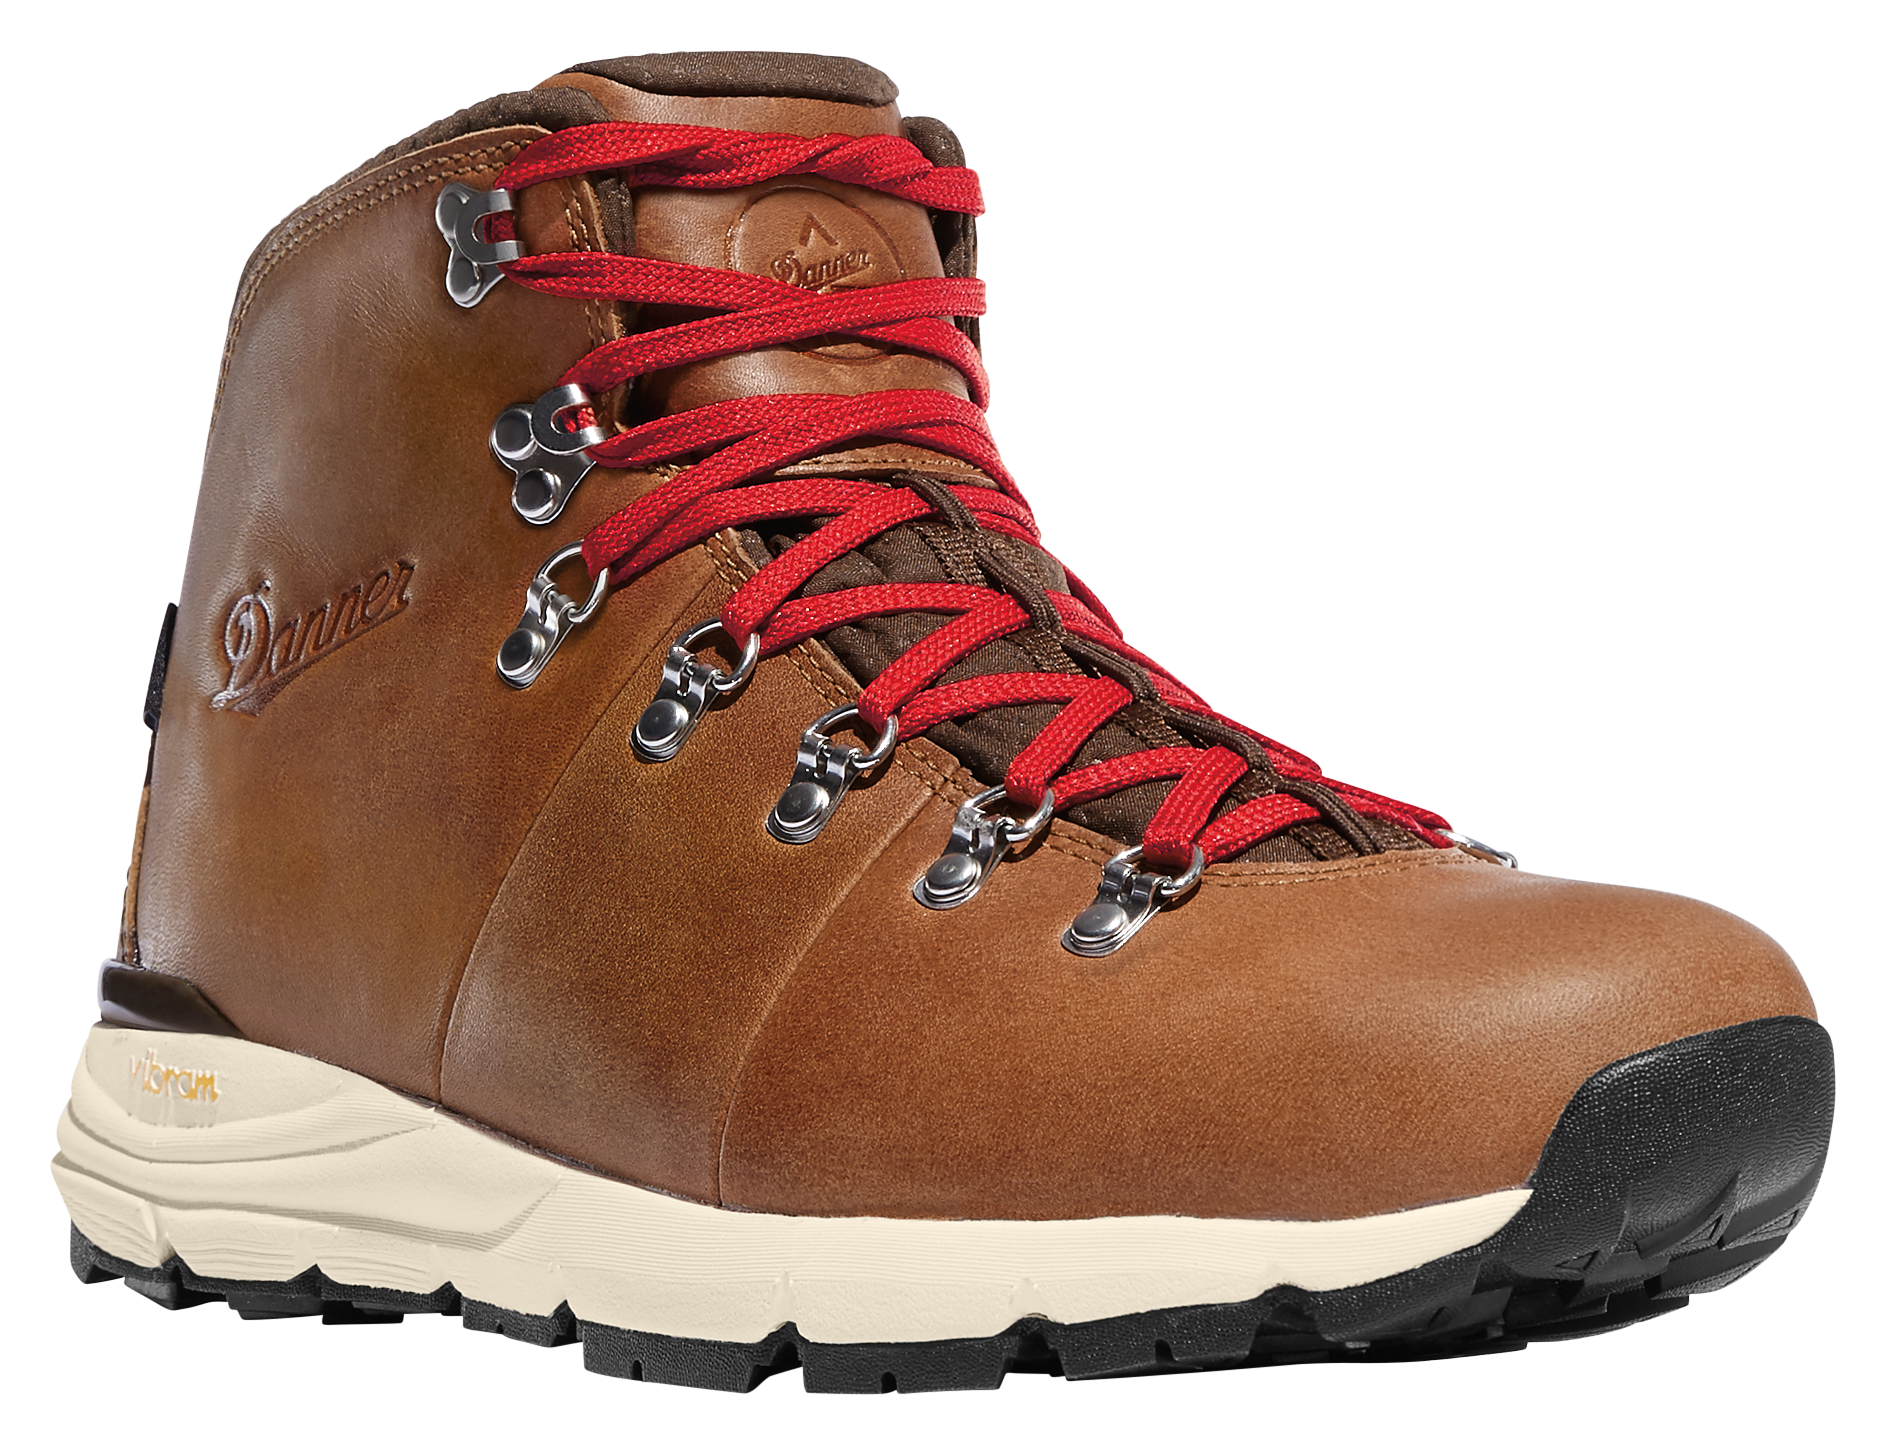 Danner Mountain 600 Waterproof Hiking Boots for Men - Saddle Tan - 13M